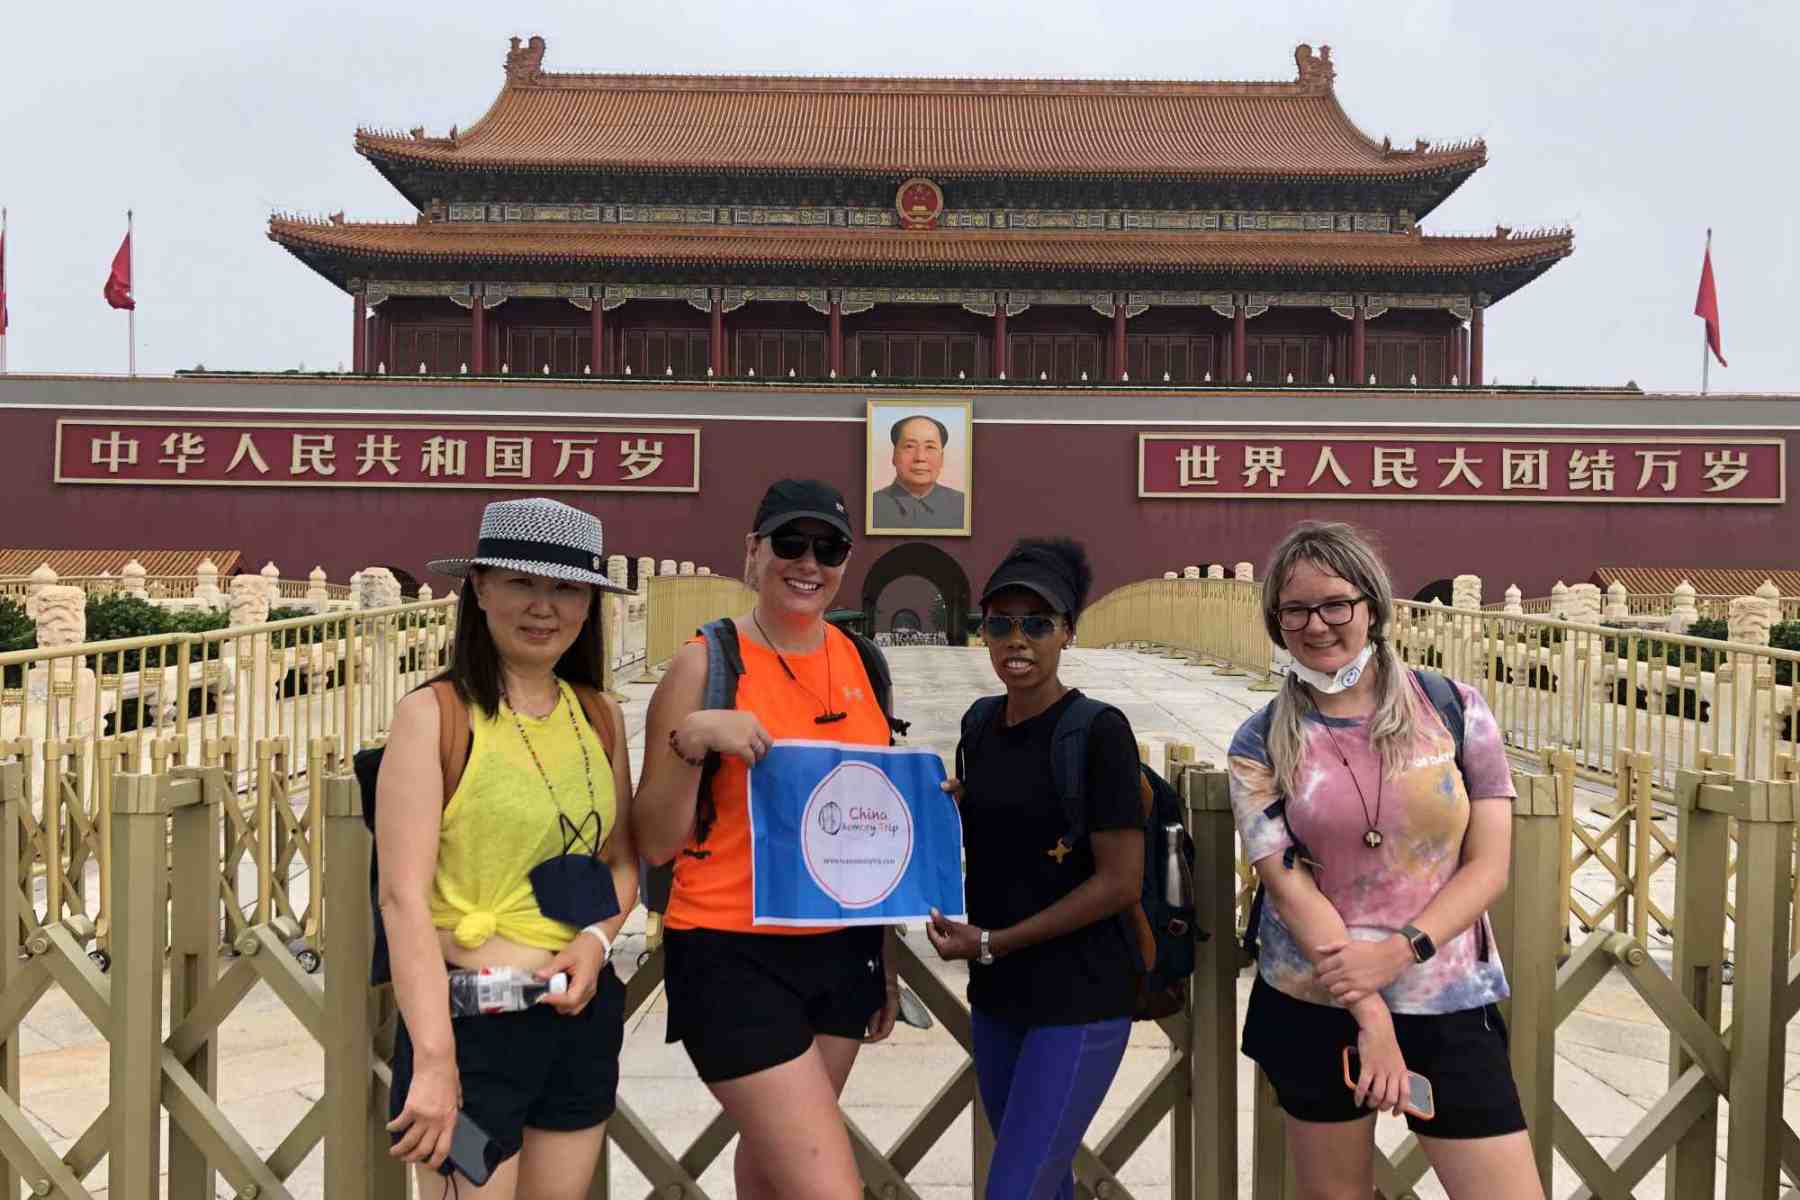 Tour around China